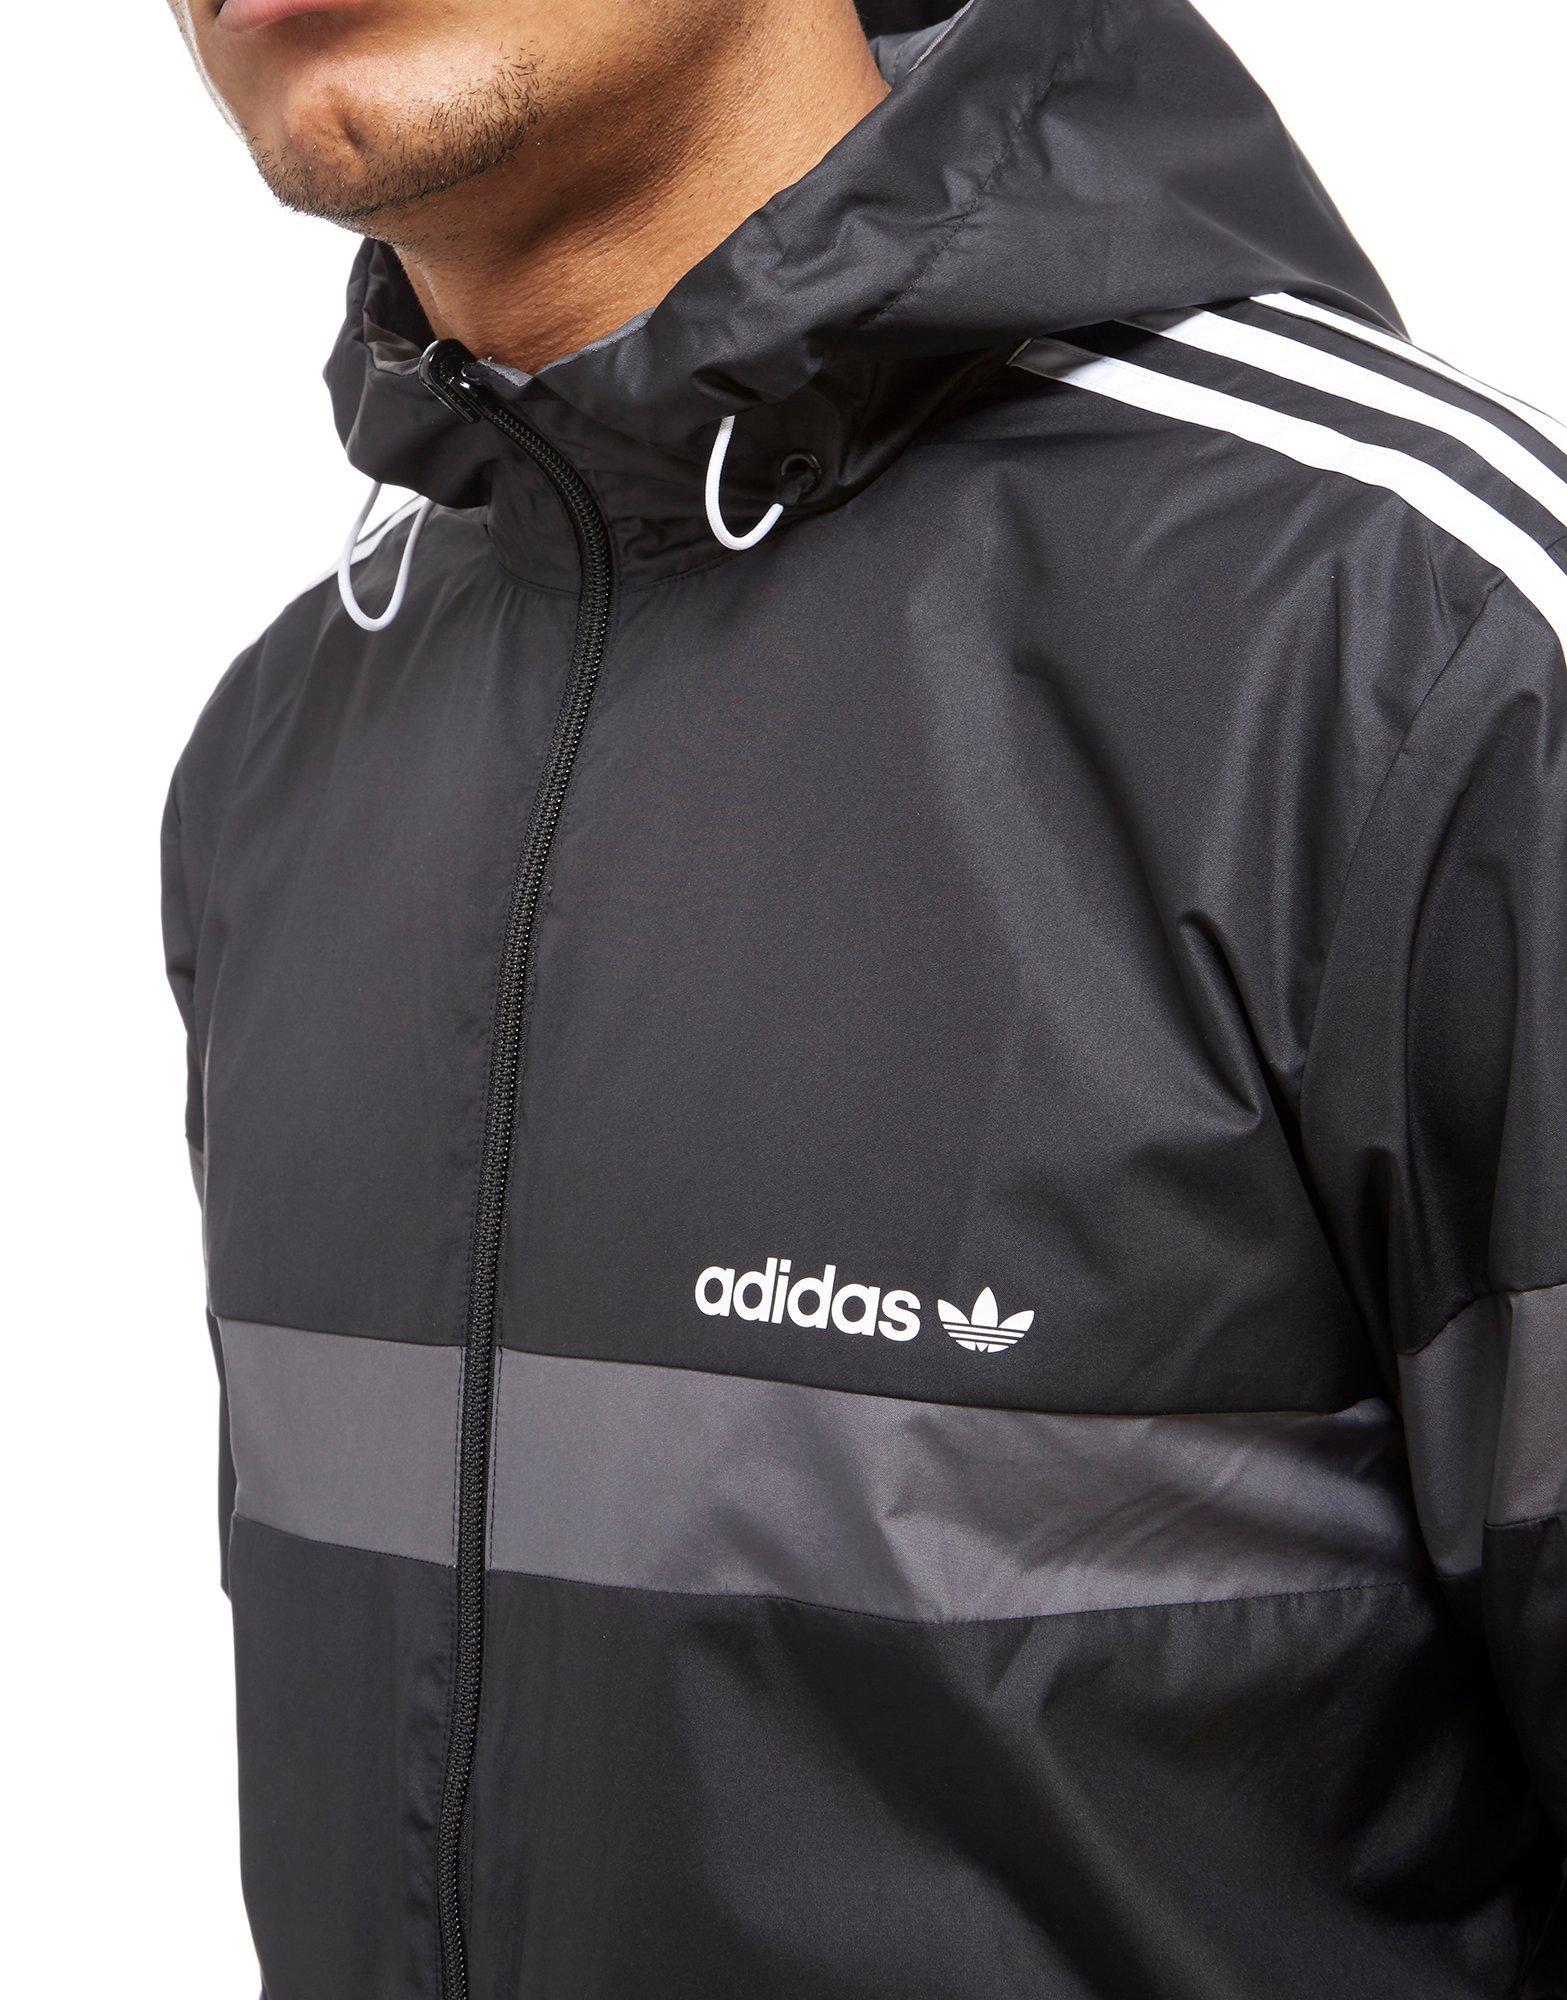 adidas originals itasca reversible jacket black